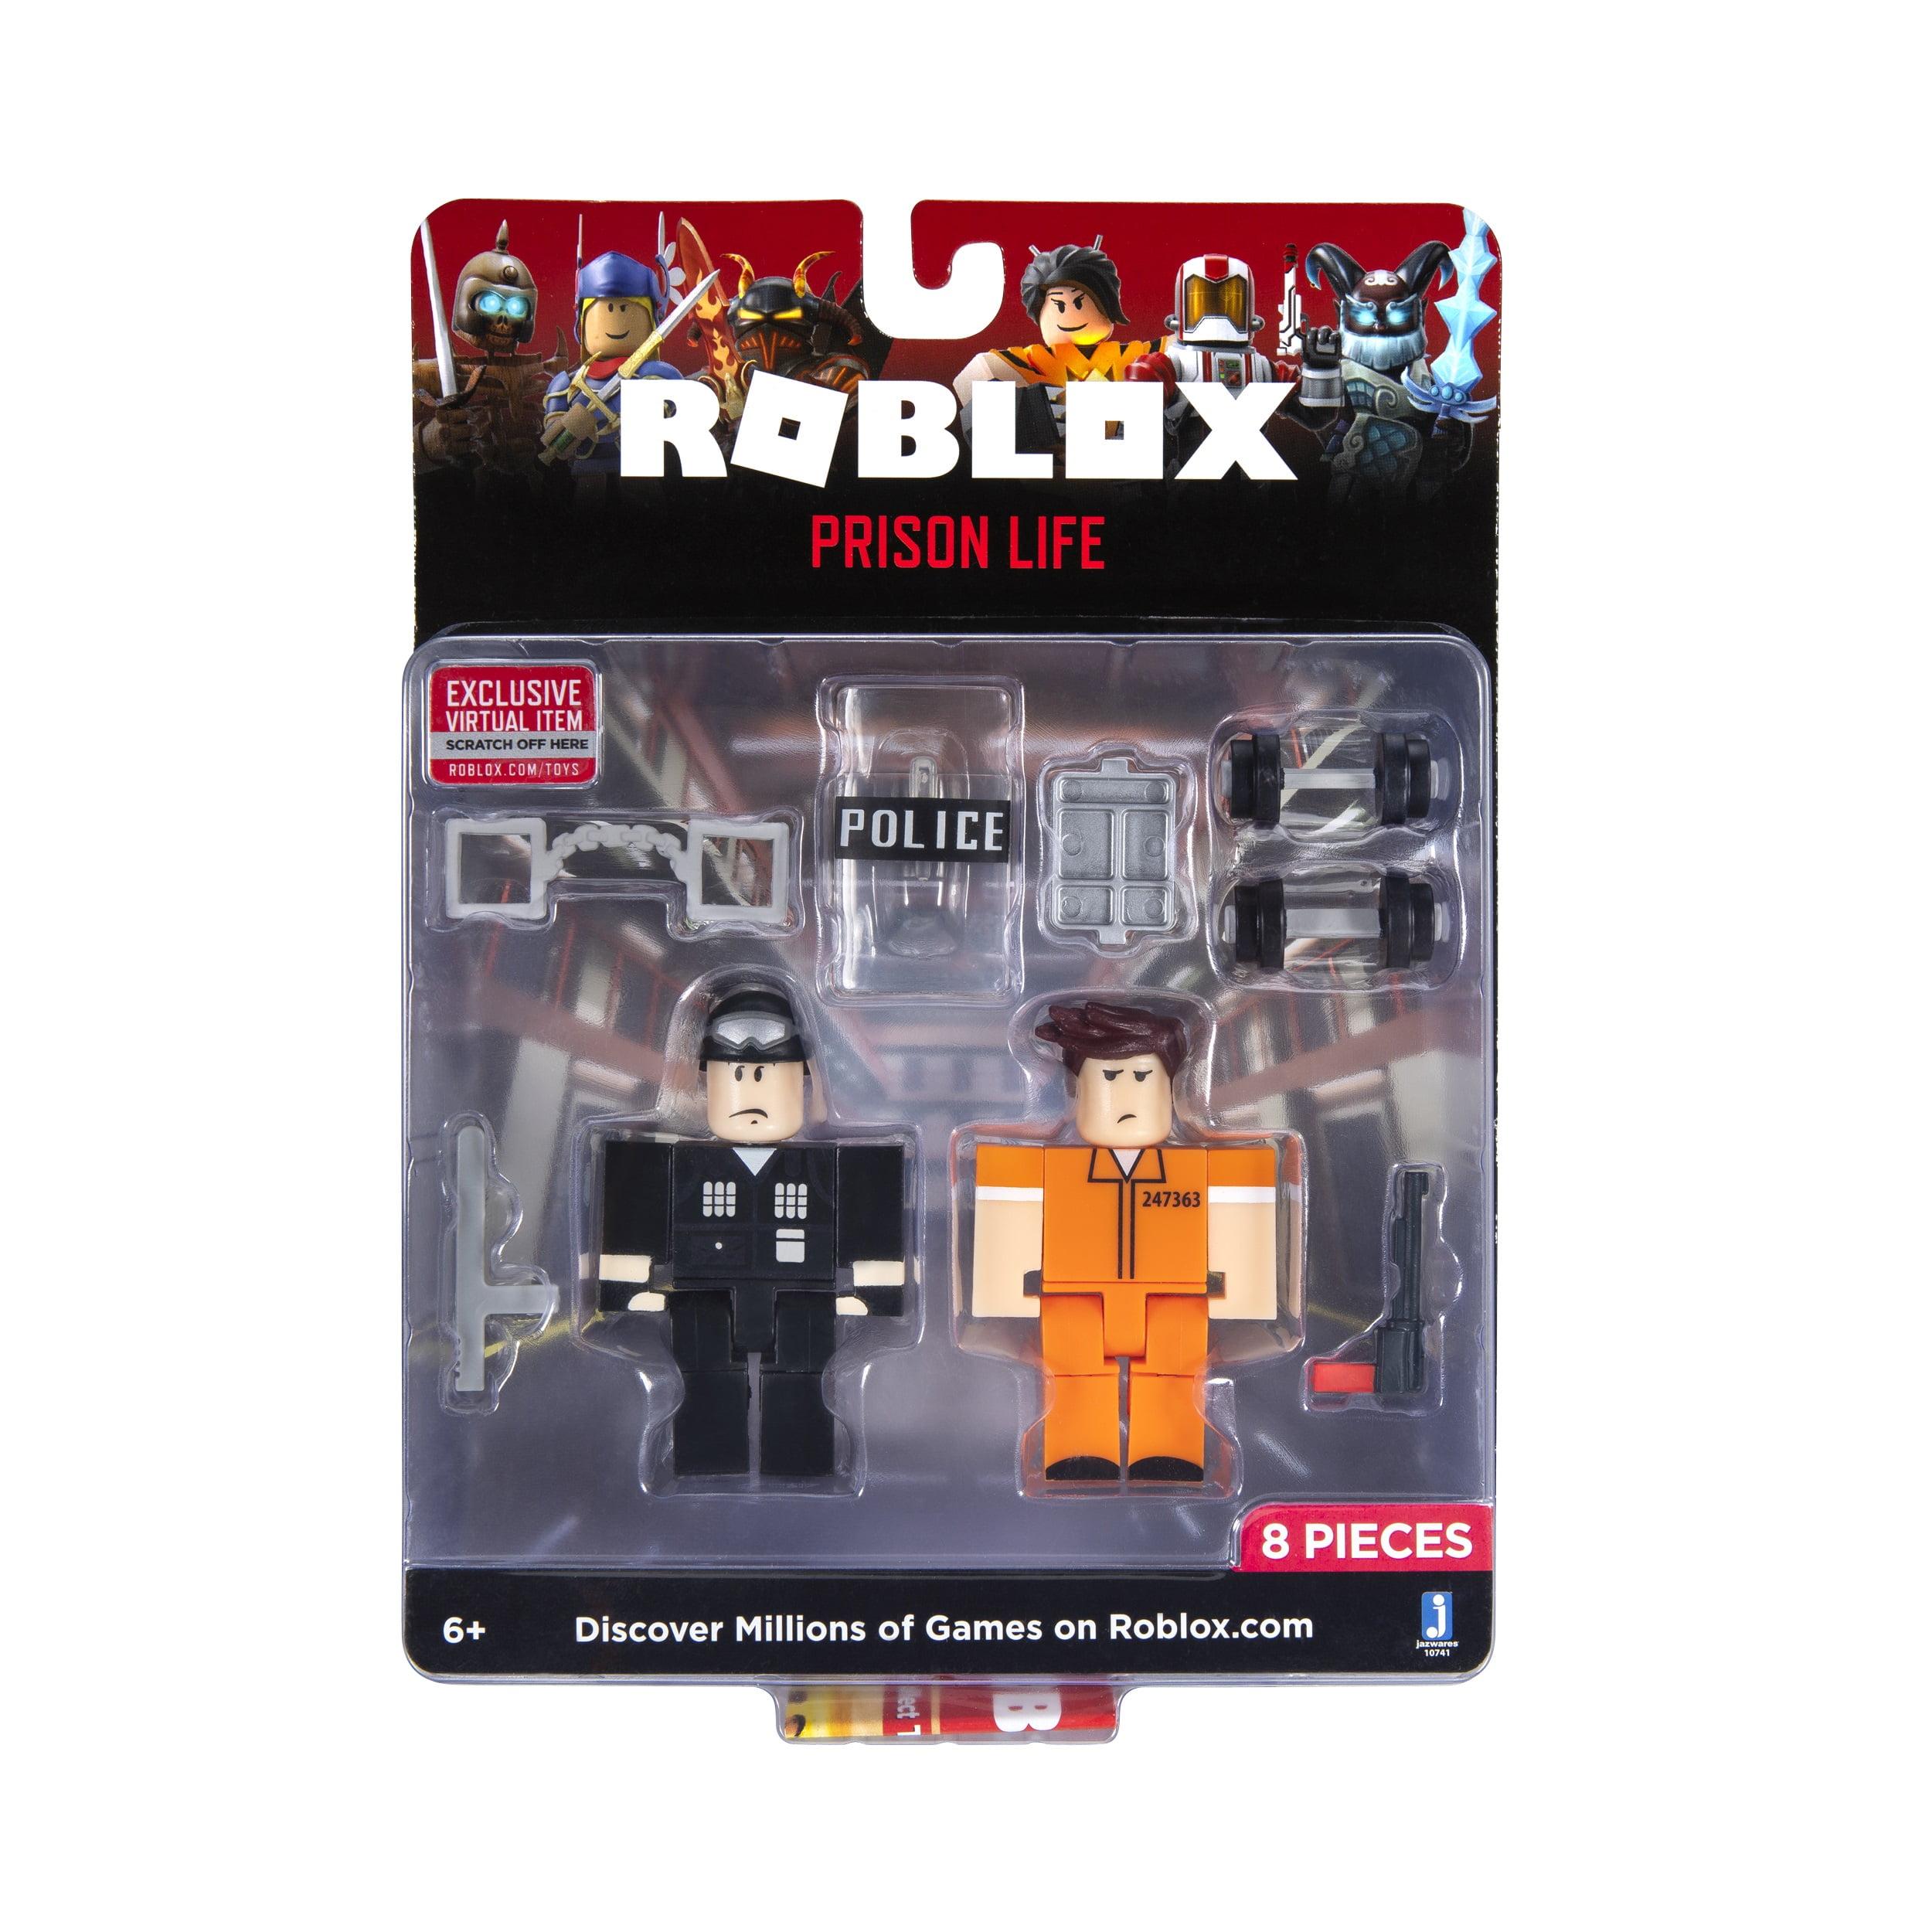 Roblox Action Collection Prison Life Game Pack Includes Exclusive Virtual Item Walmart Com Walmart Com - roblox mix match jailbreak great escape 3 figure 4 pack set